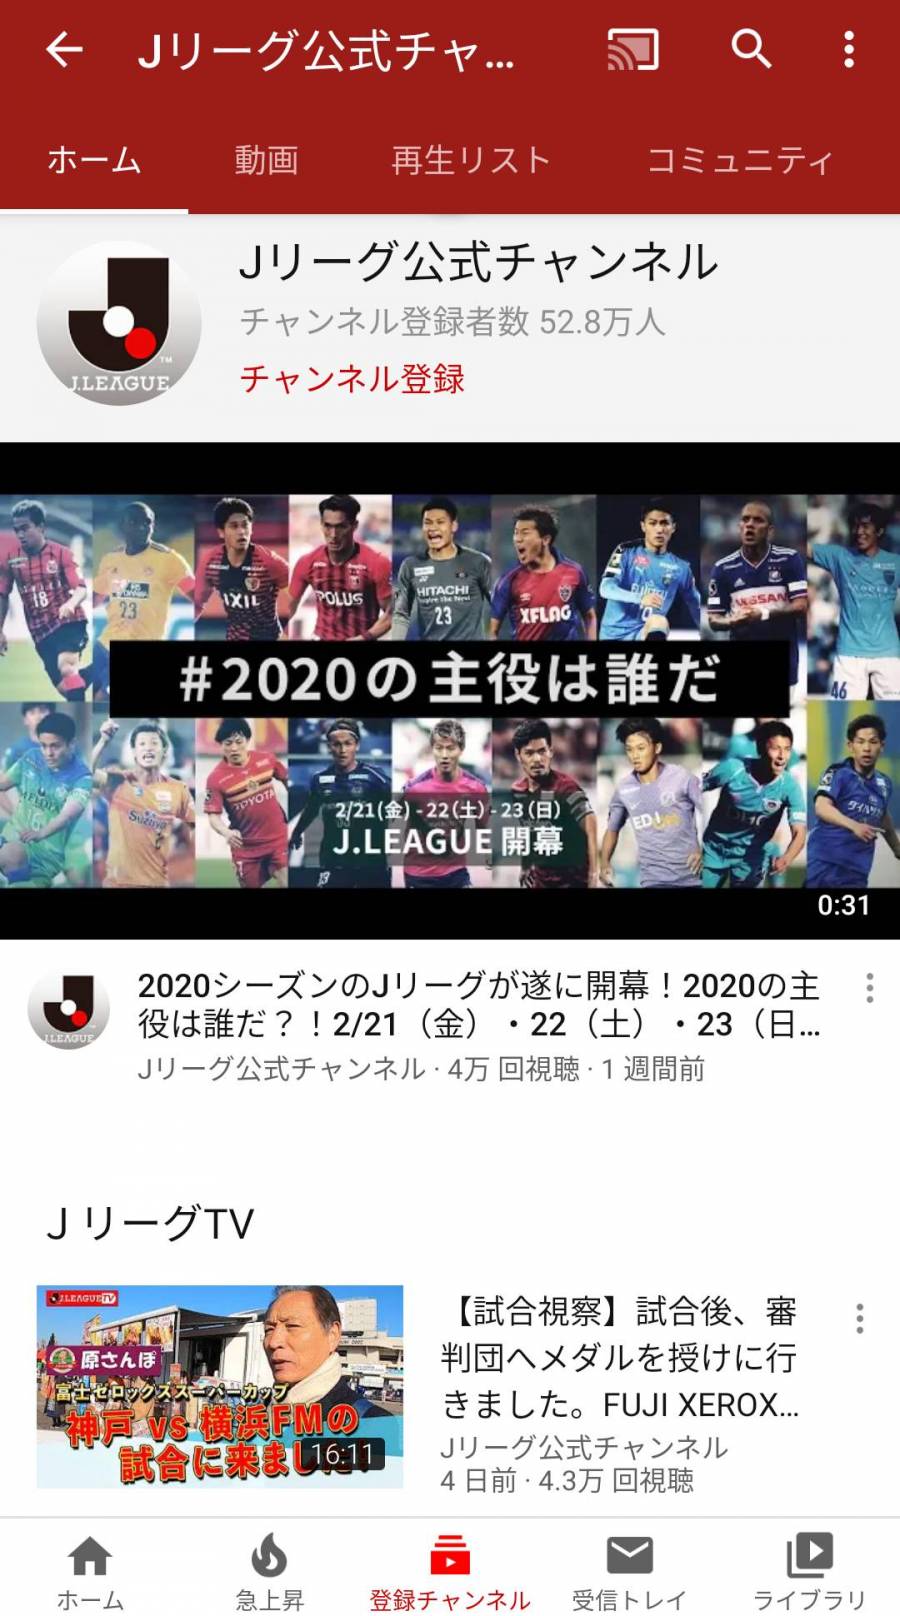 YouTube Jリーグ公式チャンネルトップページ